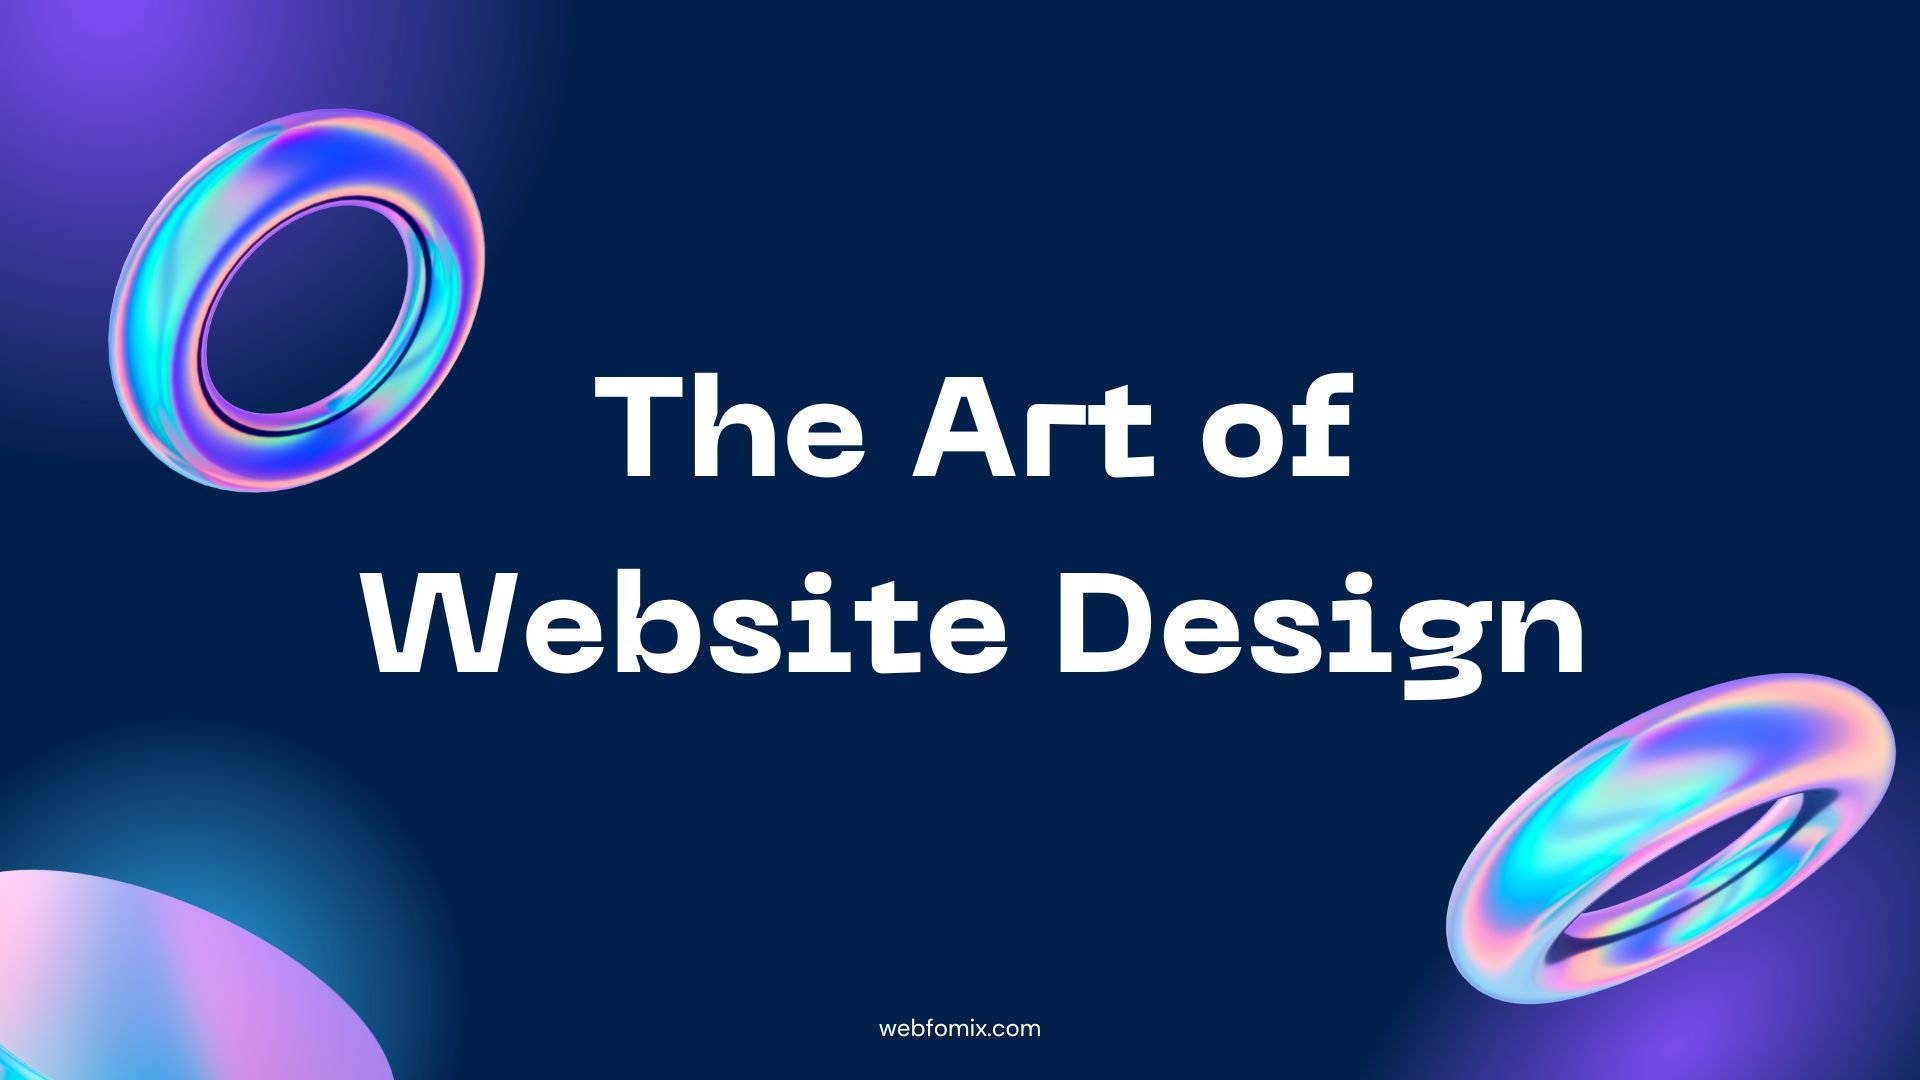 The Art of Website Design